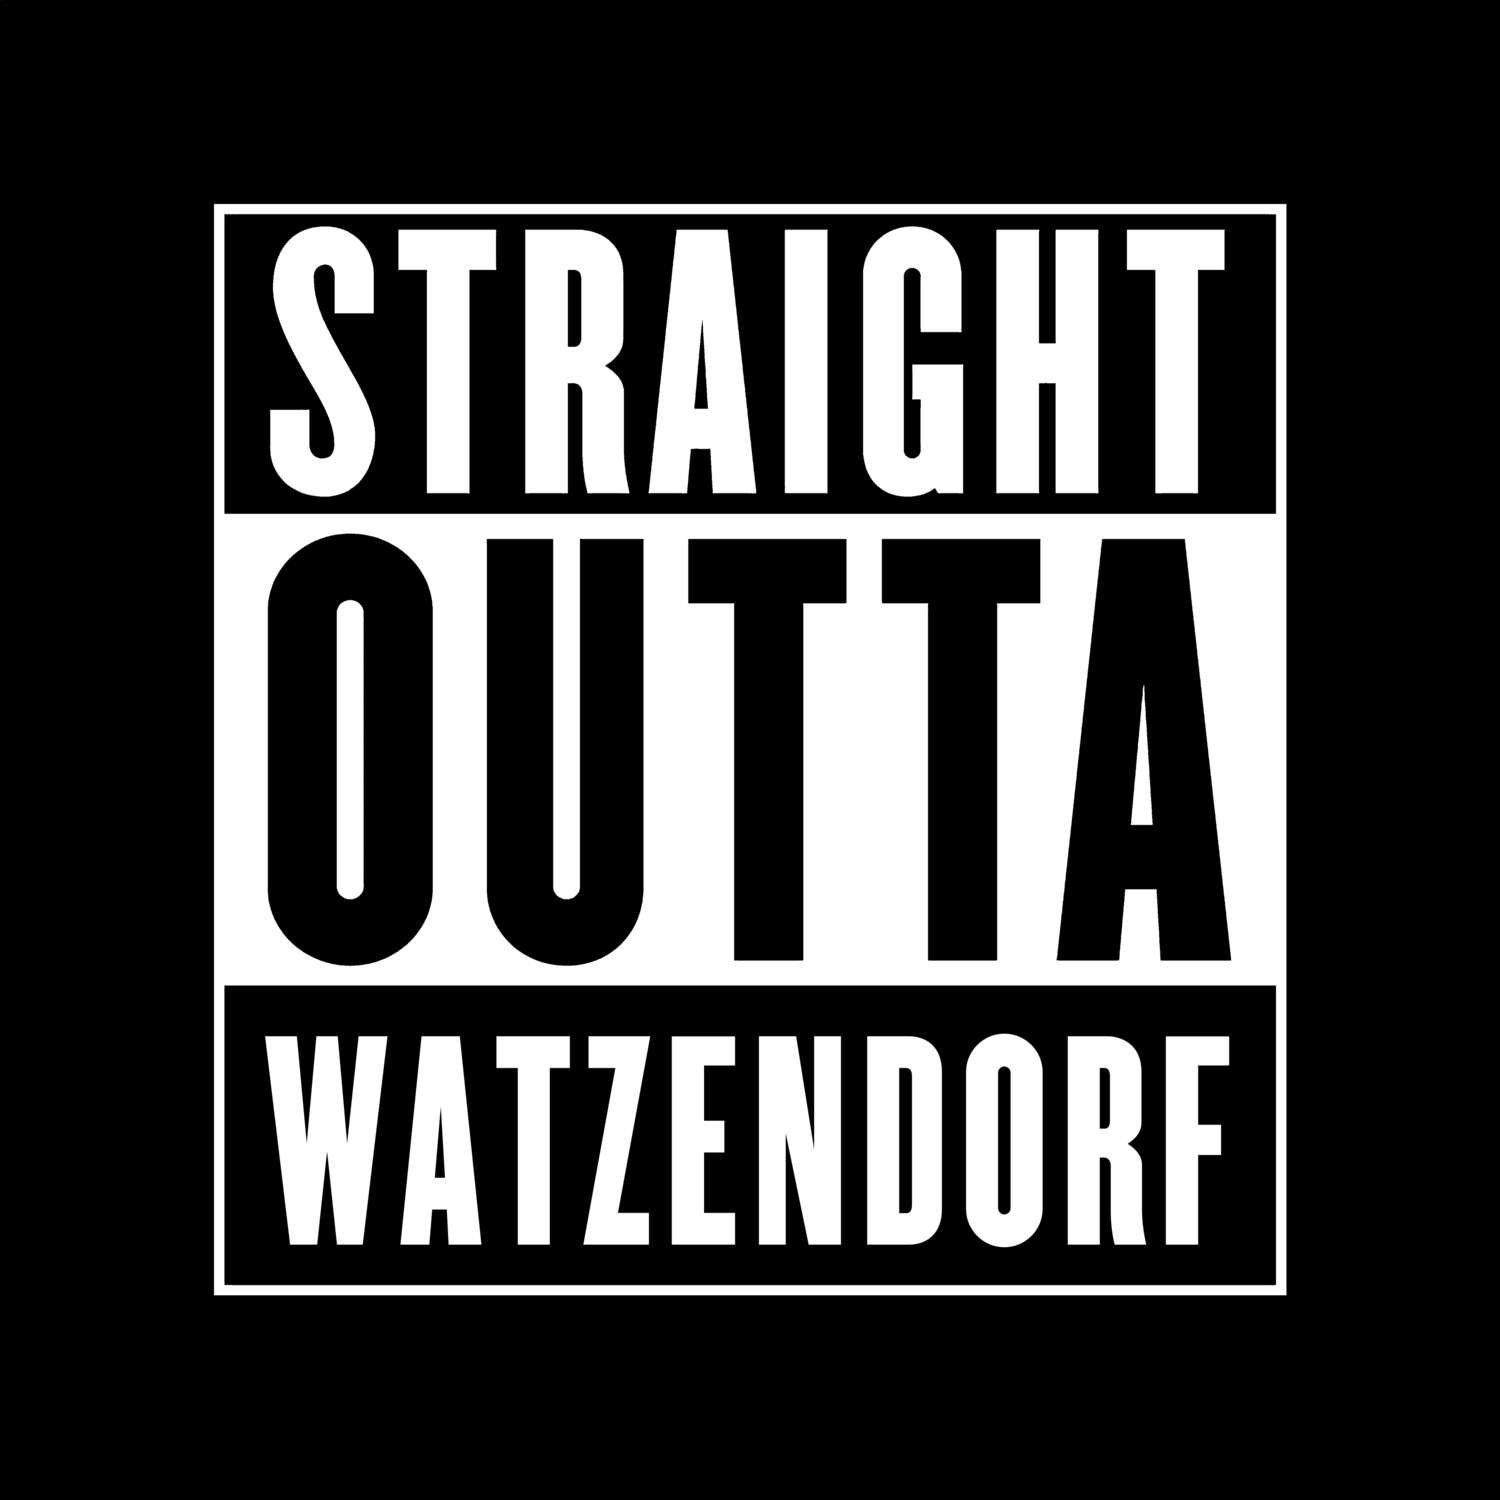 Watzendorf T-Shirt »Straight Outta«